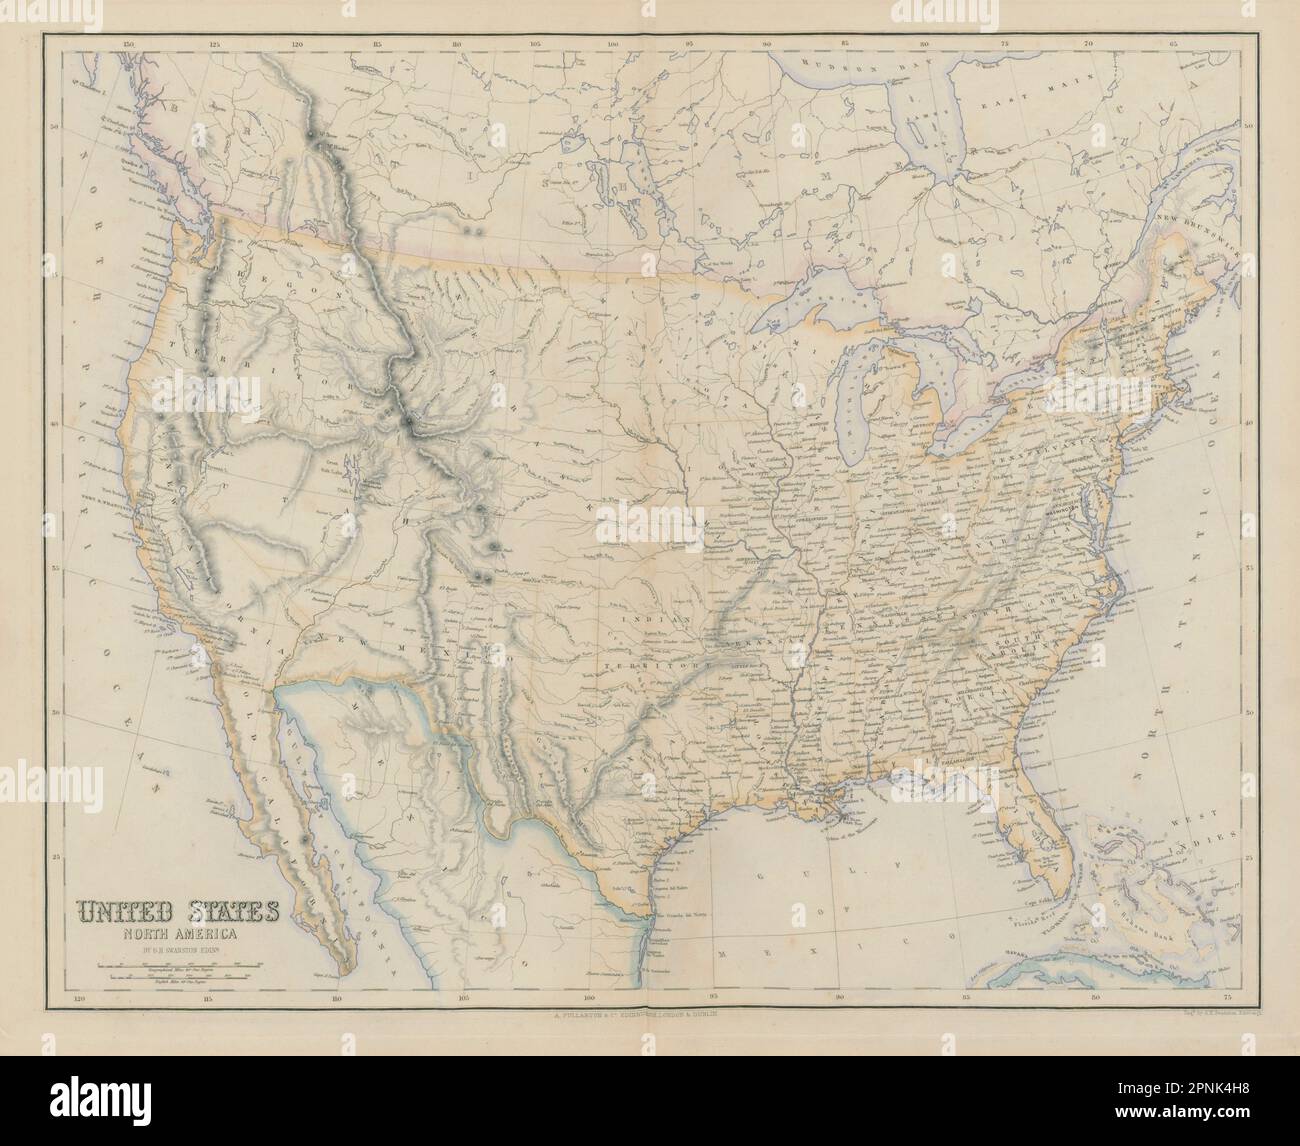 United States. 'New California'. Oregon Territory. SWANSTON 1860 old map Stock Photo